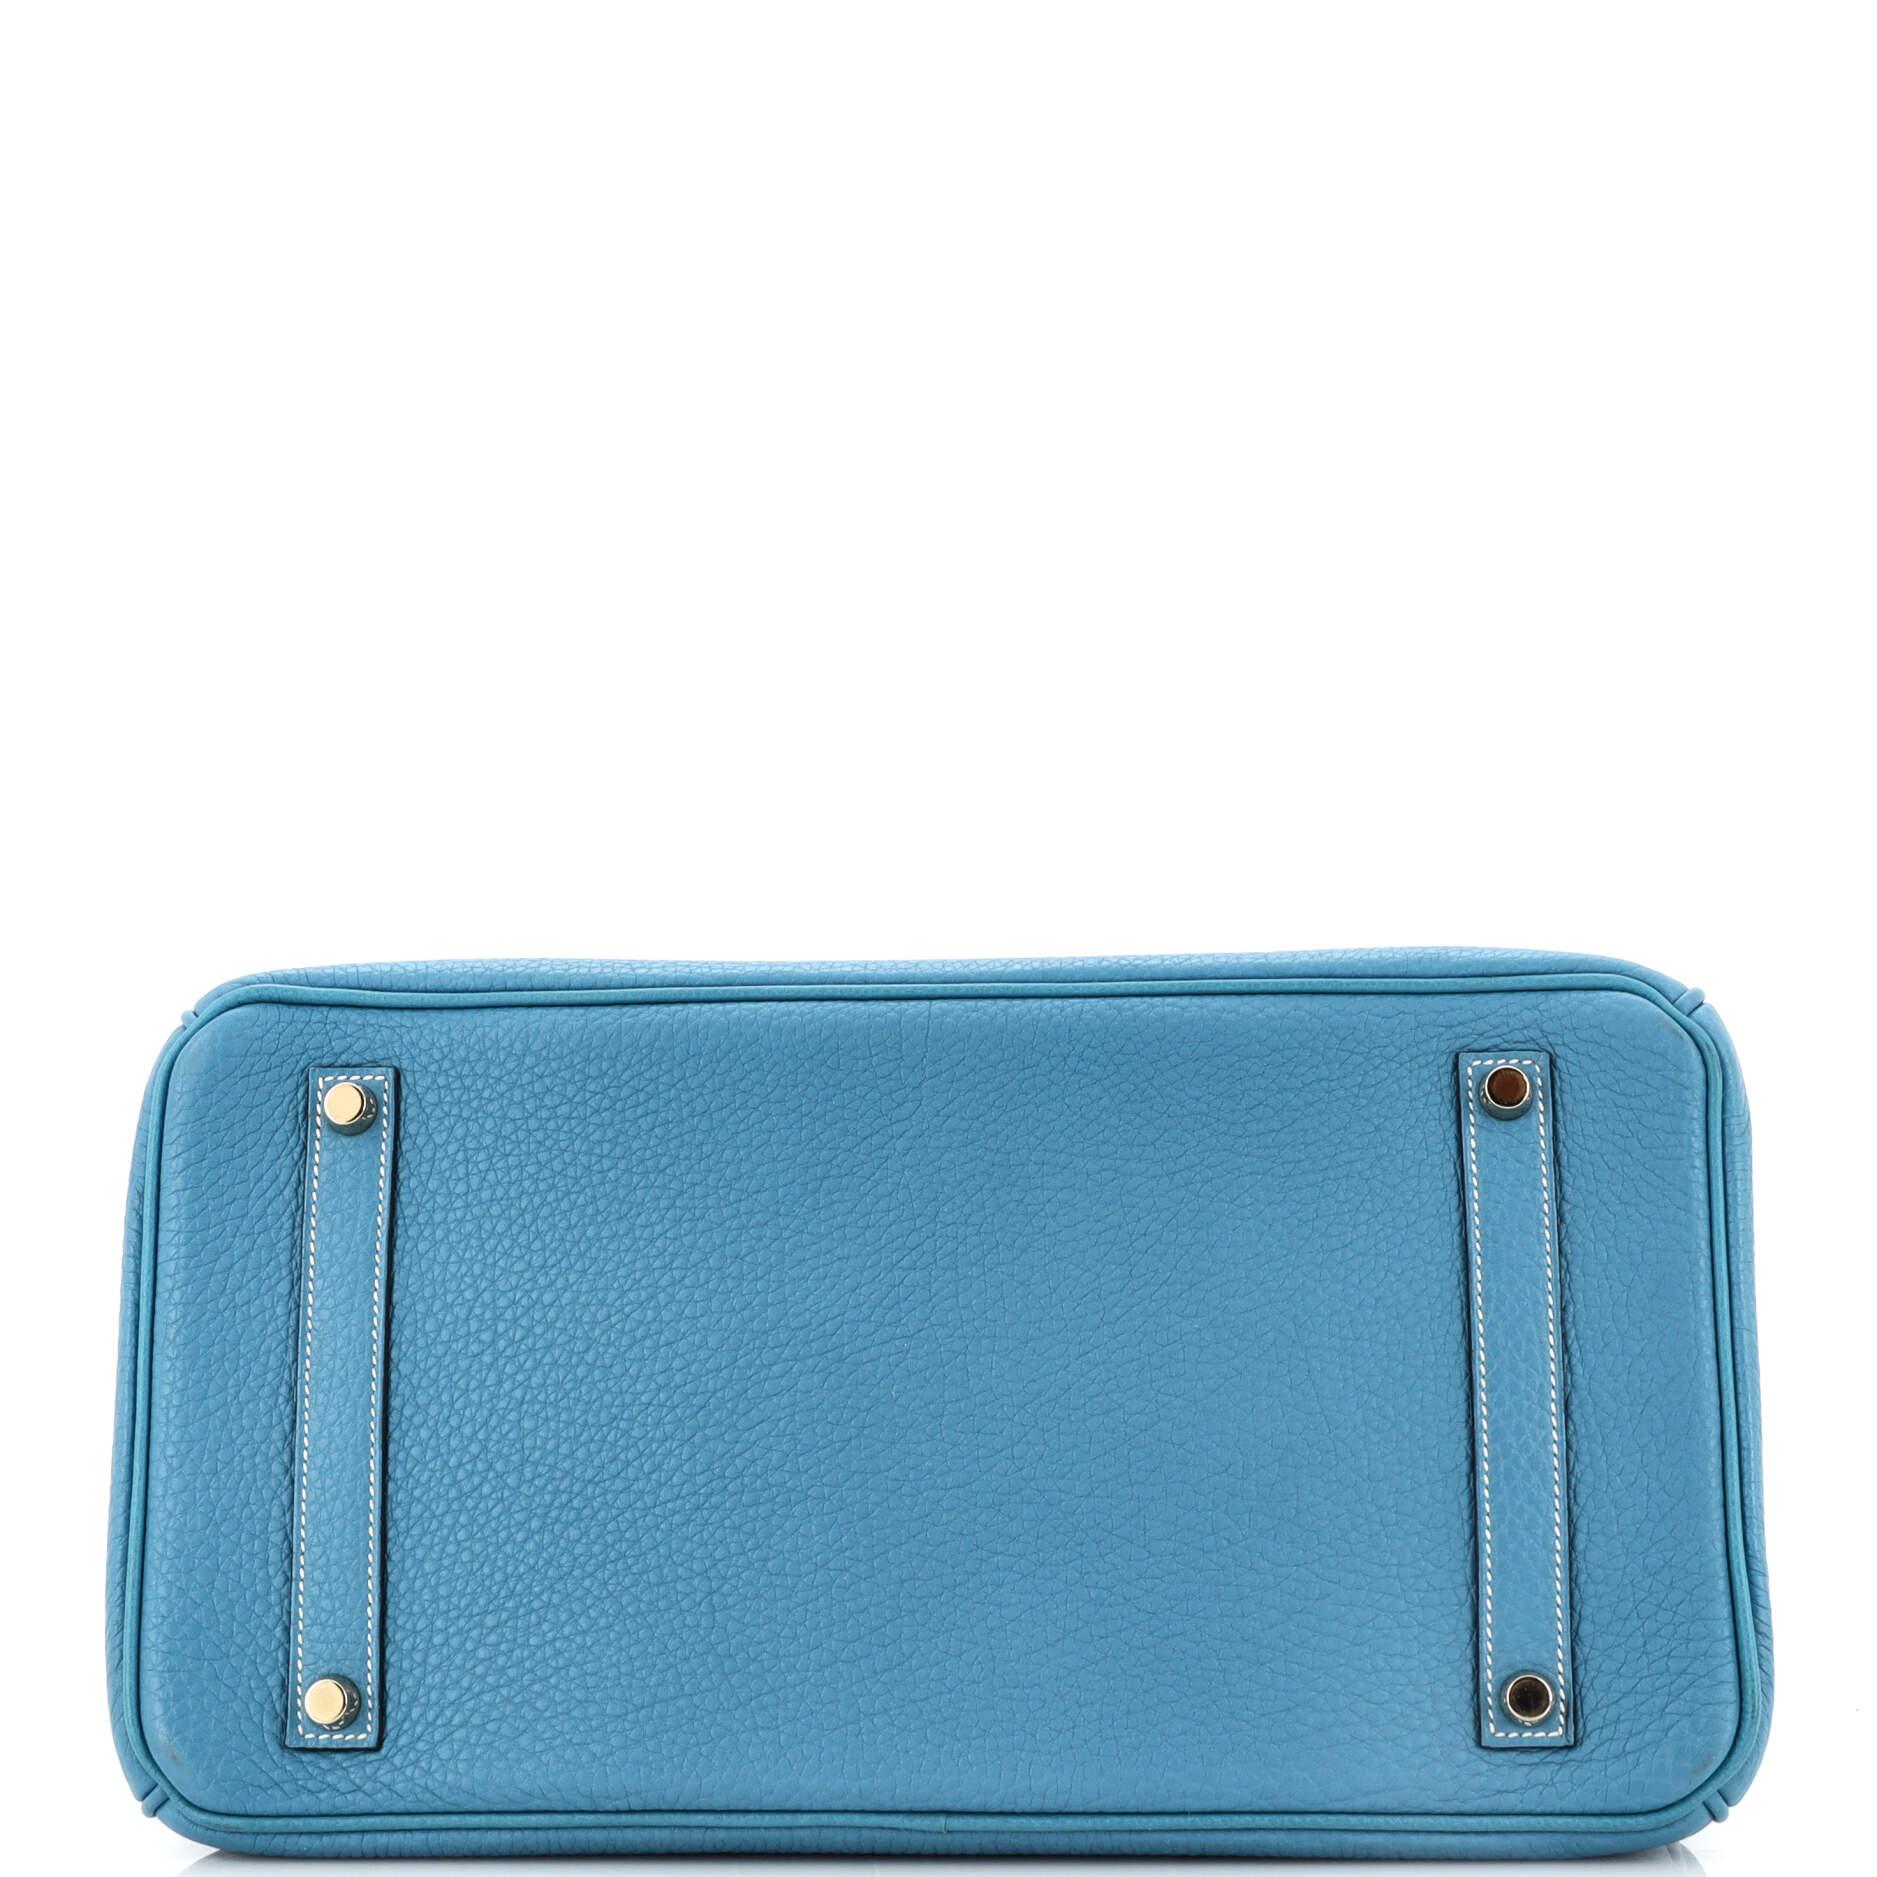 Women's Hermes Birkin Handbag Blue Jean Togo with Gold Hardware 35